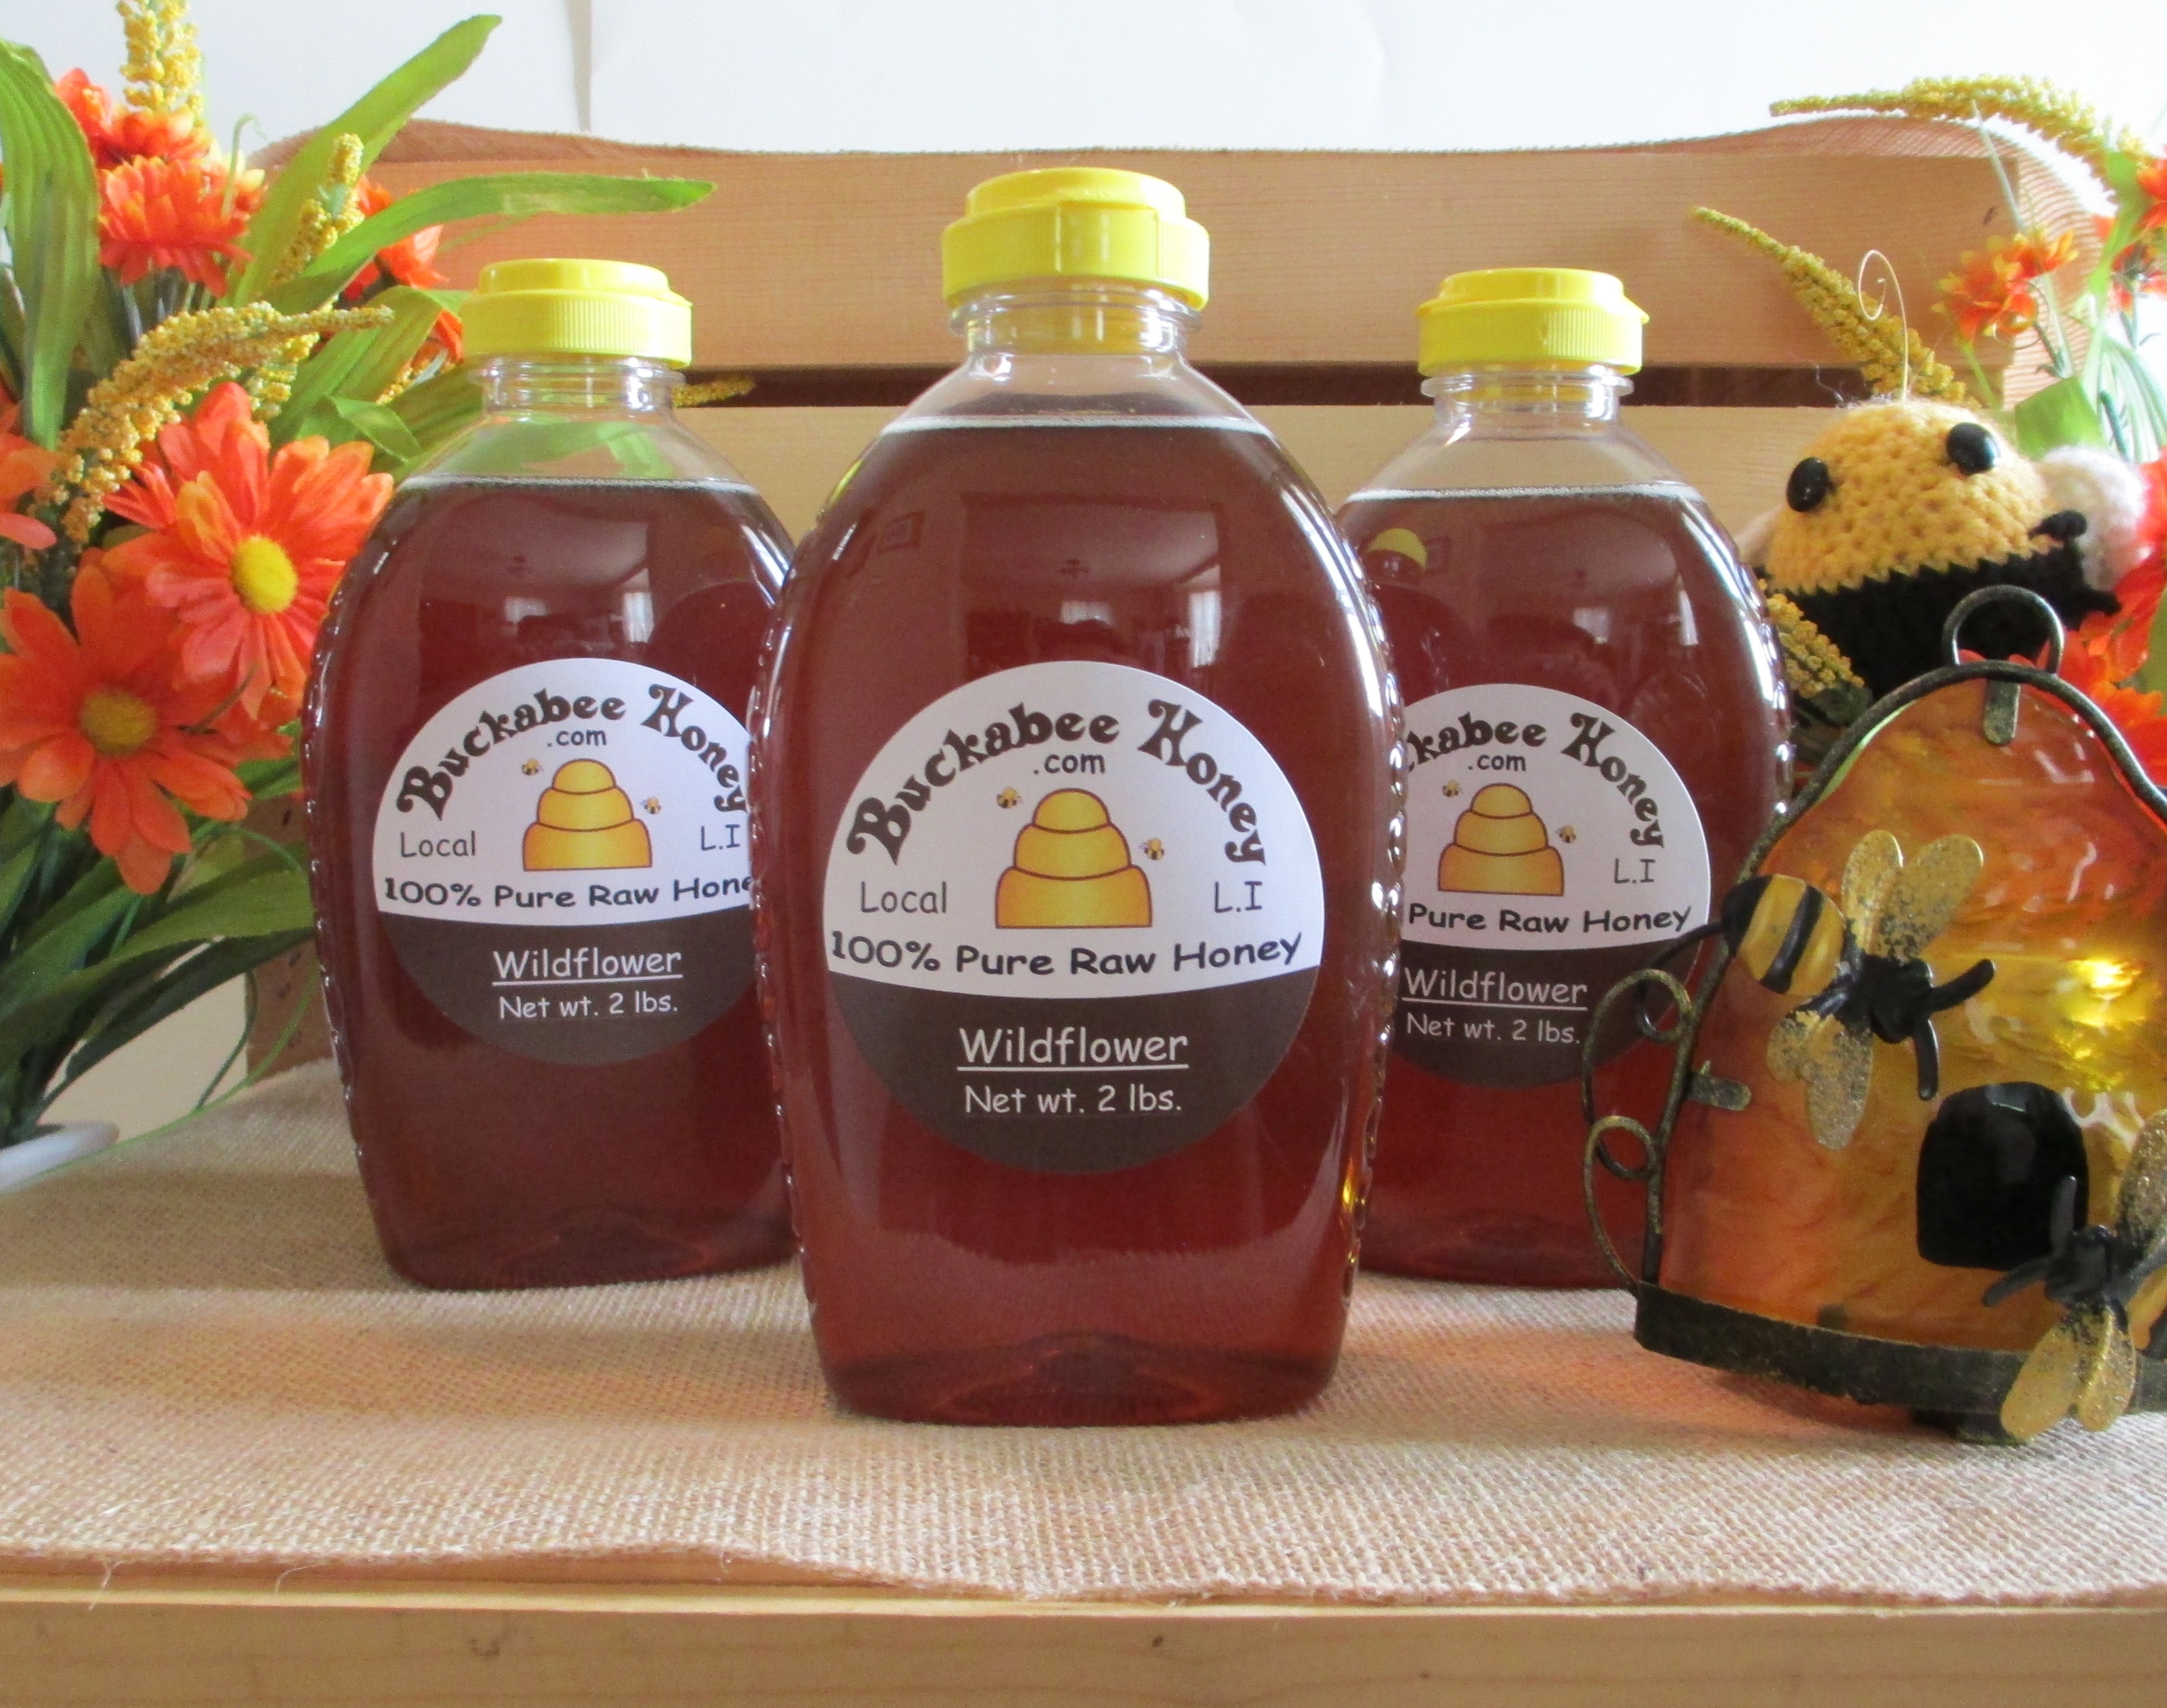 2 lb. Honey bottle (Local Long Island Pure Raw Wildflower Honey)